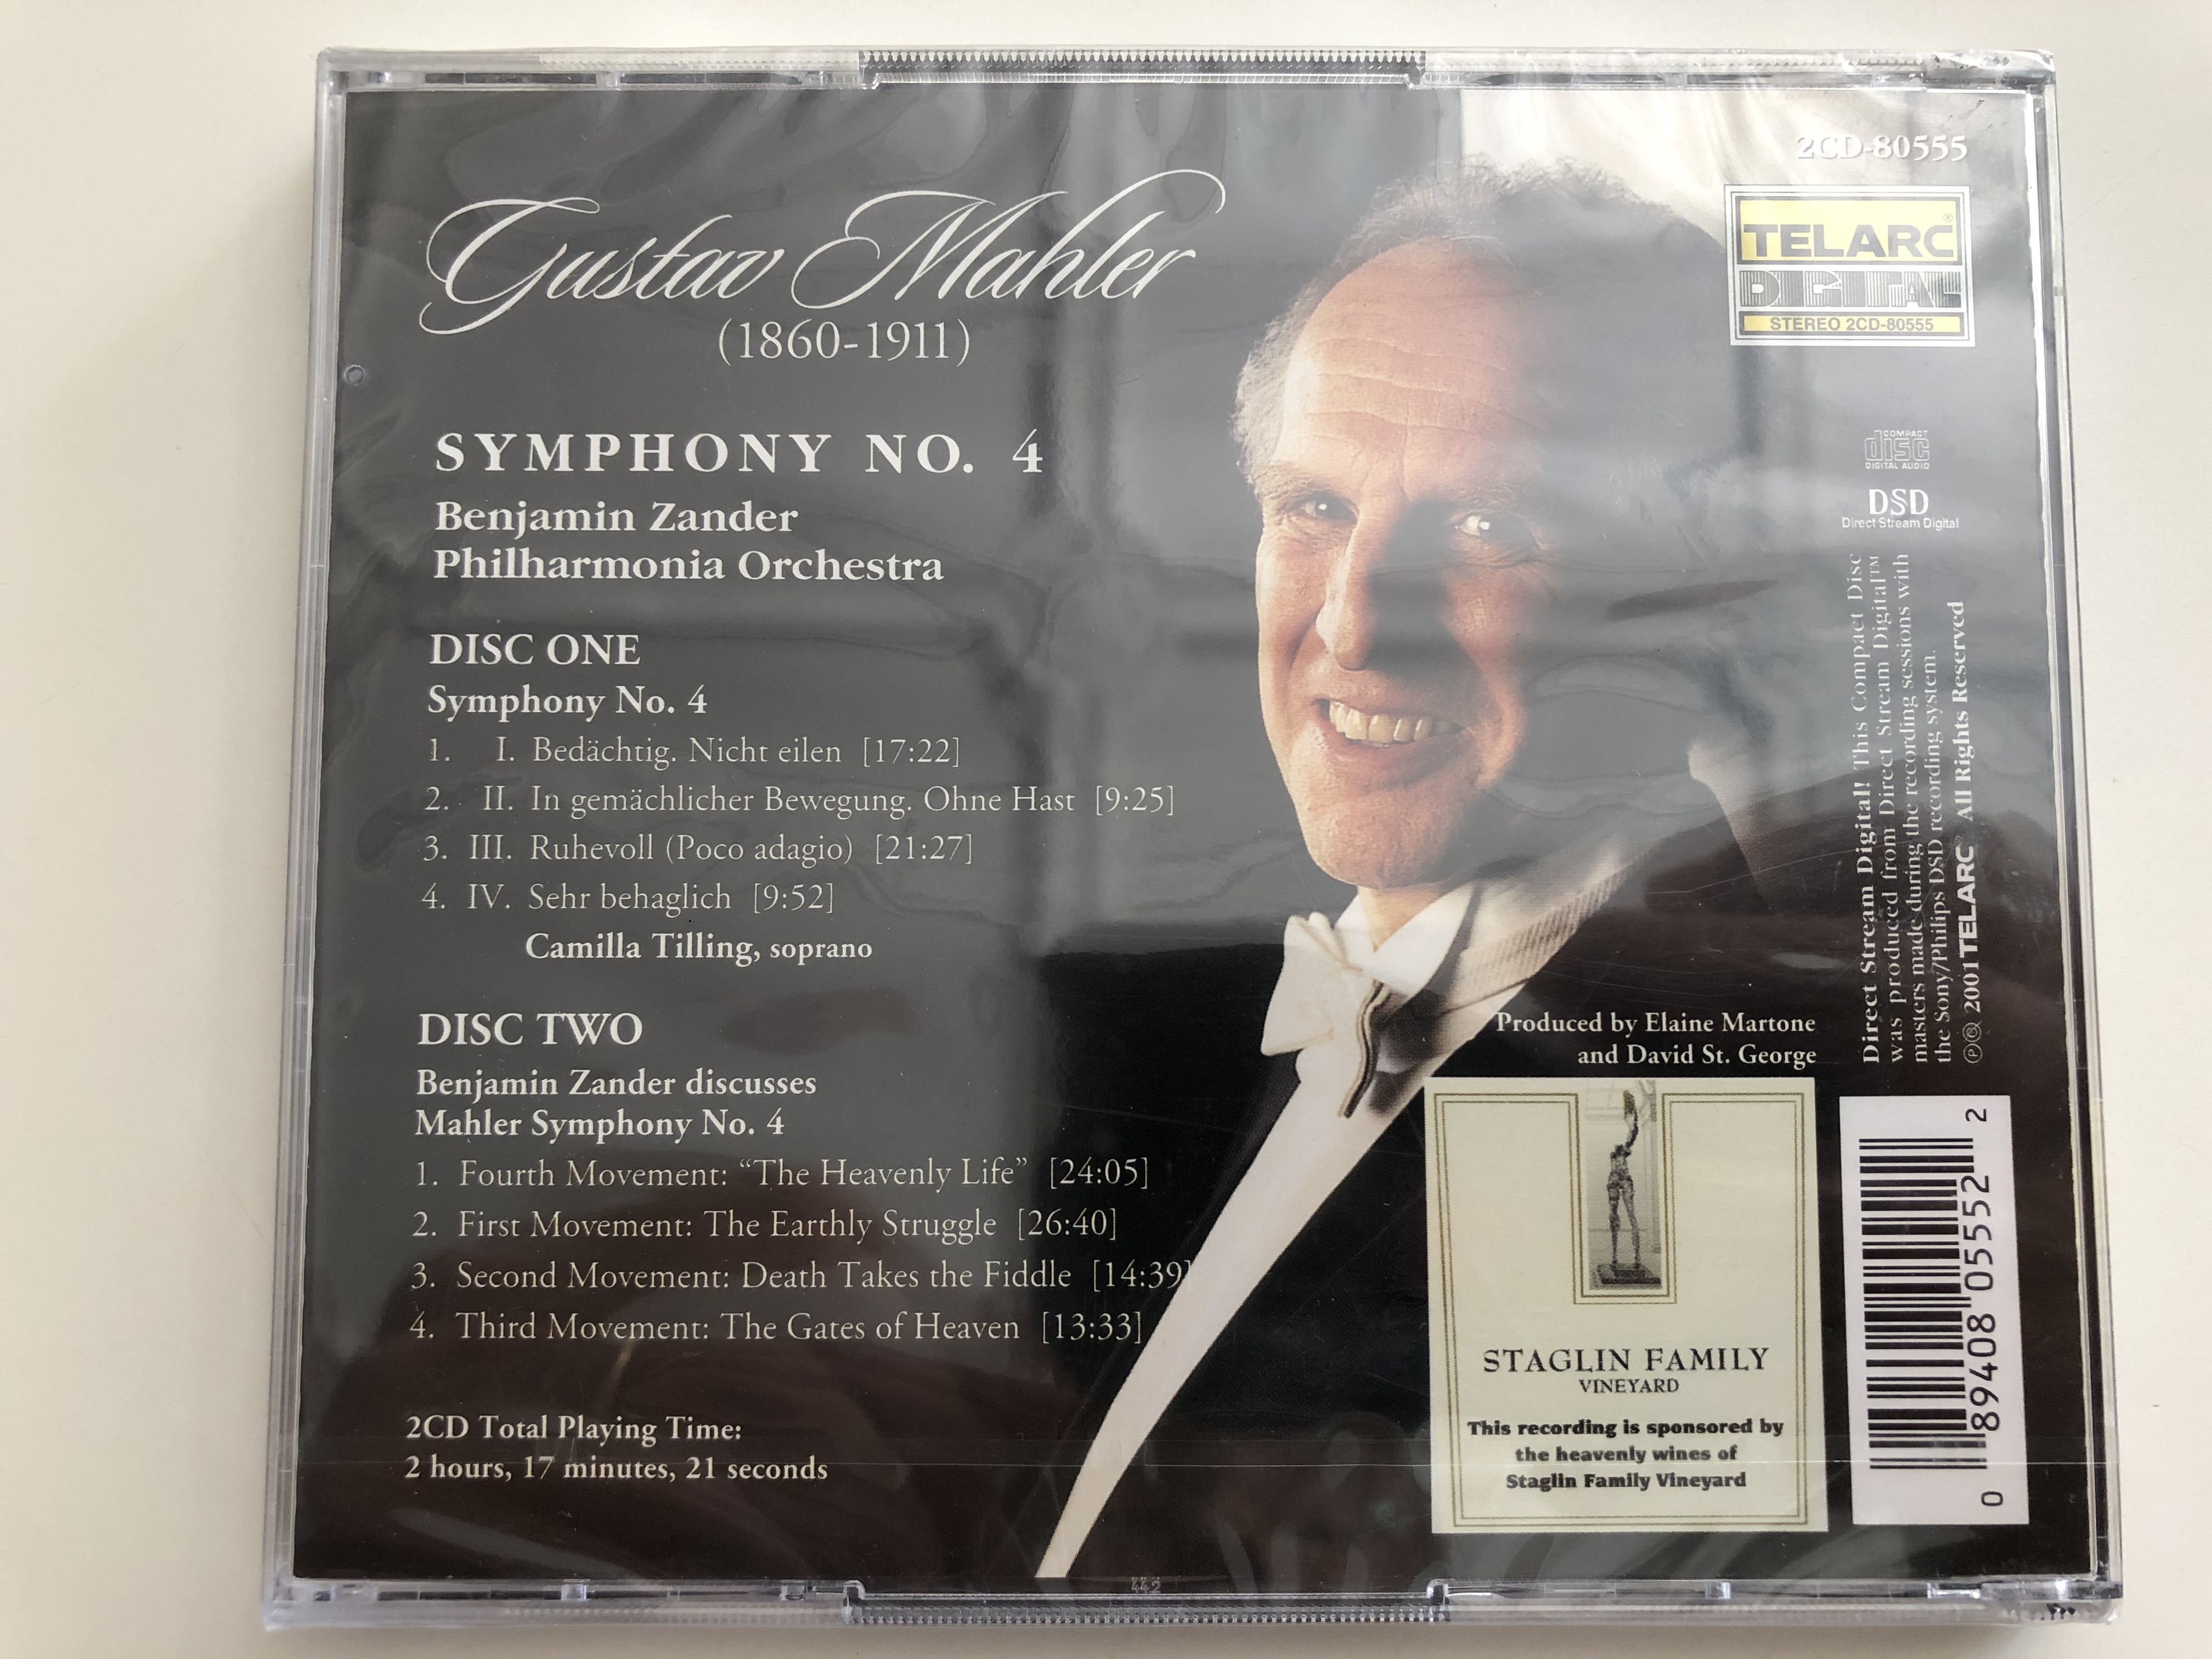 -mahler-symphony-no.-4-benjamin-zander-philharmonia-orchestra-camilla-tilling-soprano-includes-bonus-cd-2cd-audio-set-telarc-digital-2-.jpg